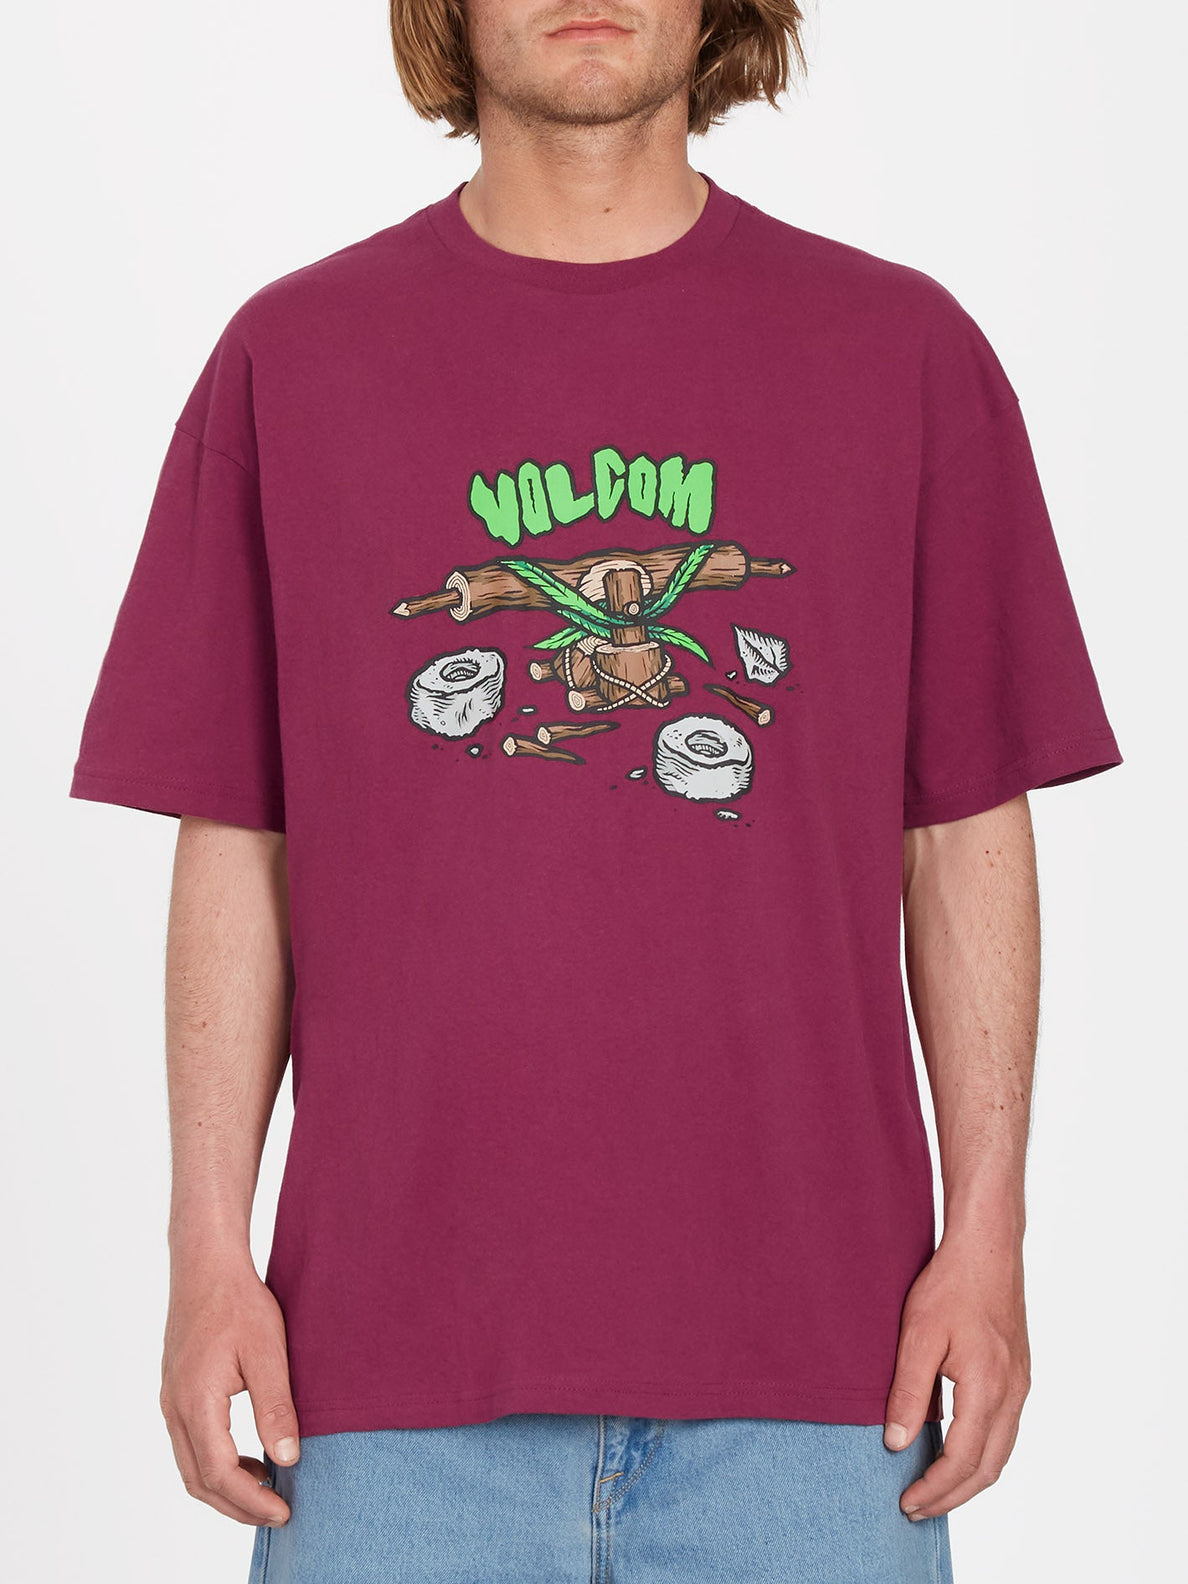 Camiseta Volcom Todd Bratrud SS Plum | Camisetas de hombre | Camisetas manga corta de hombre | Volcom Shop | surfdevils.com